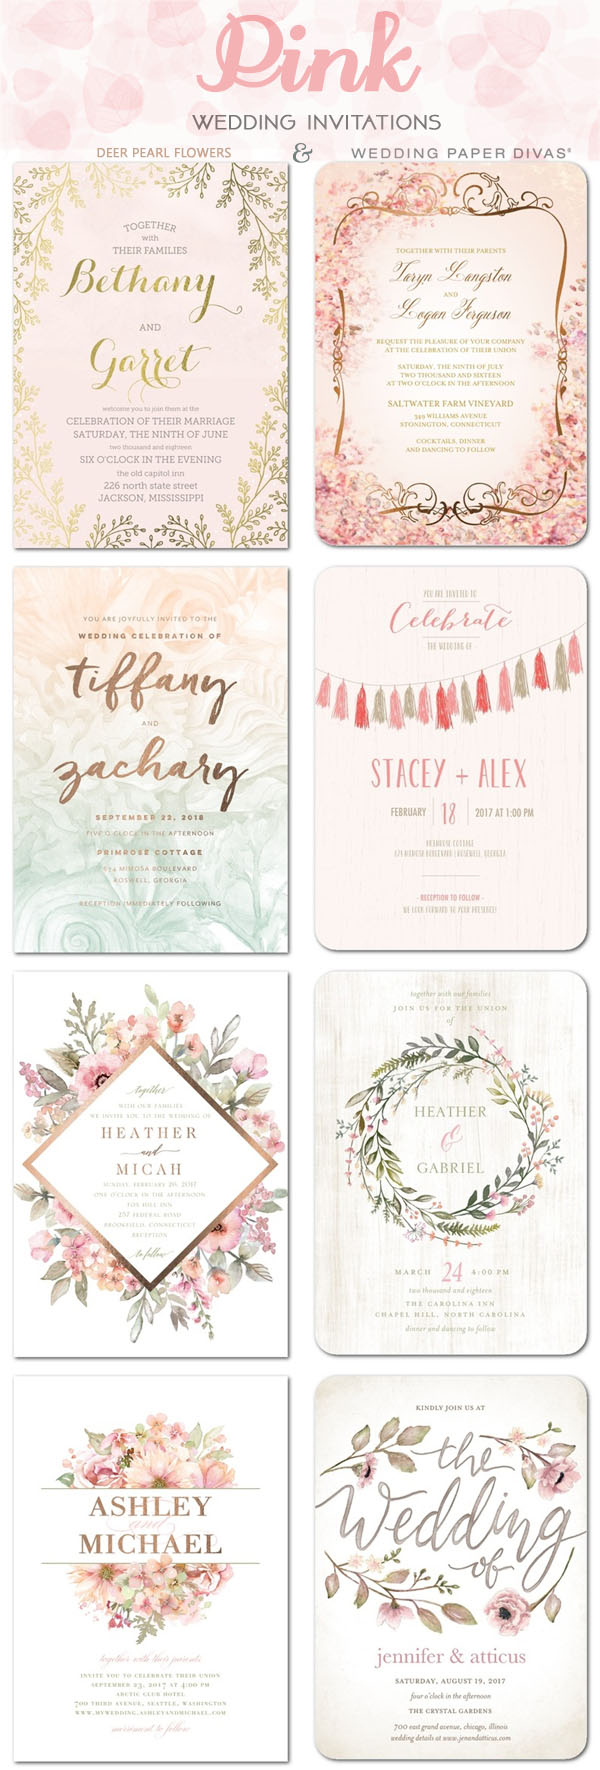 Pink wedding color ideas - Pink wedding invitations